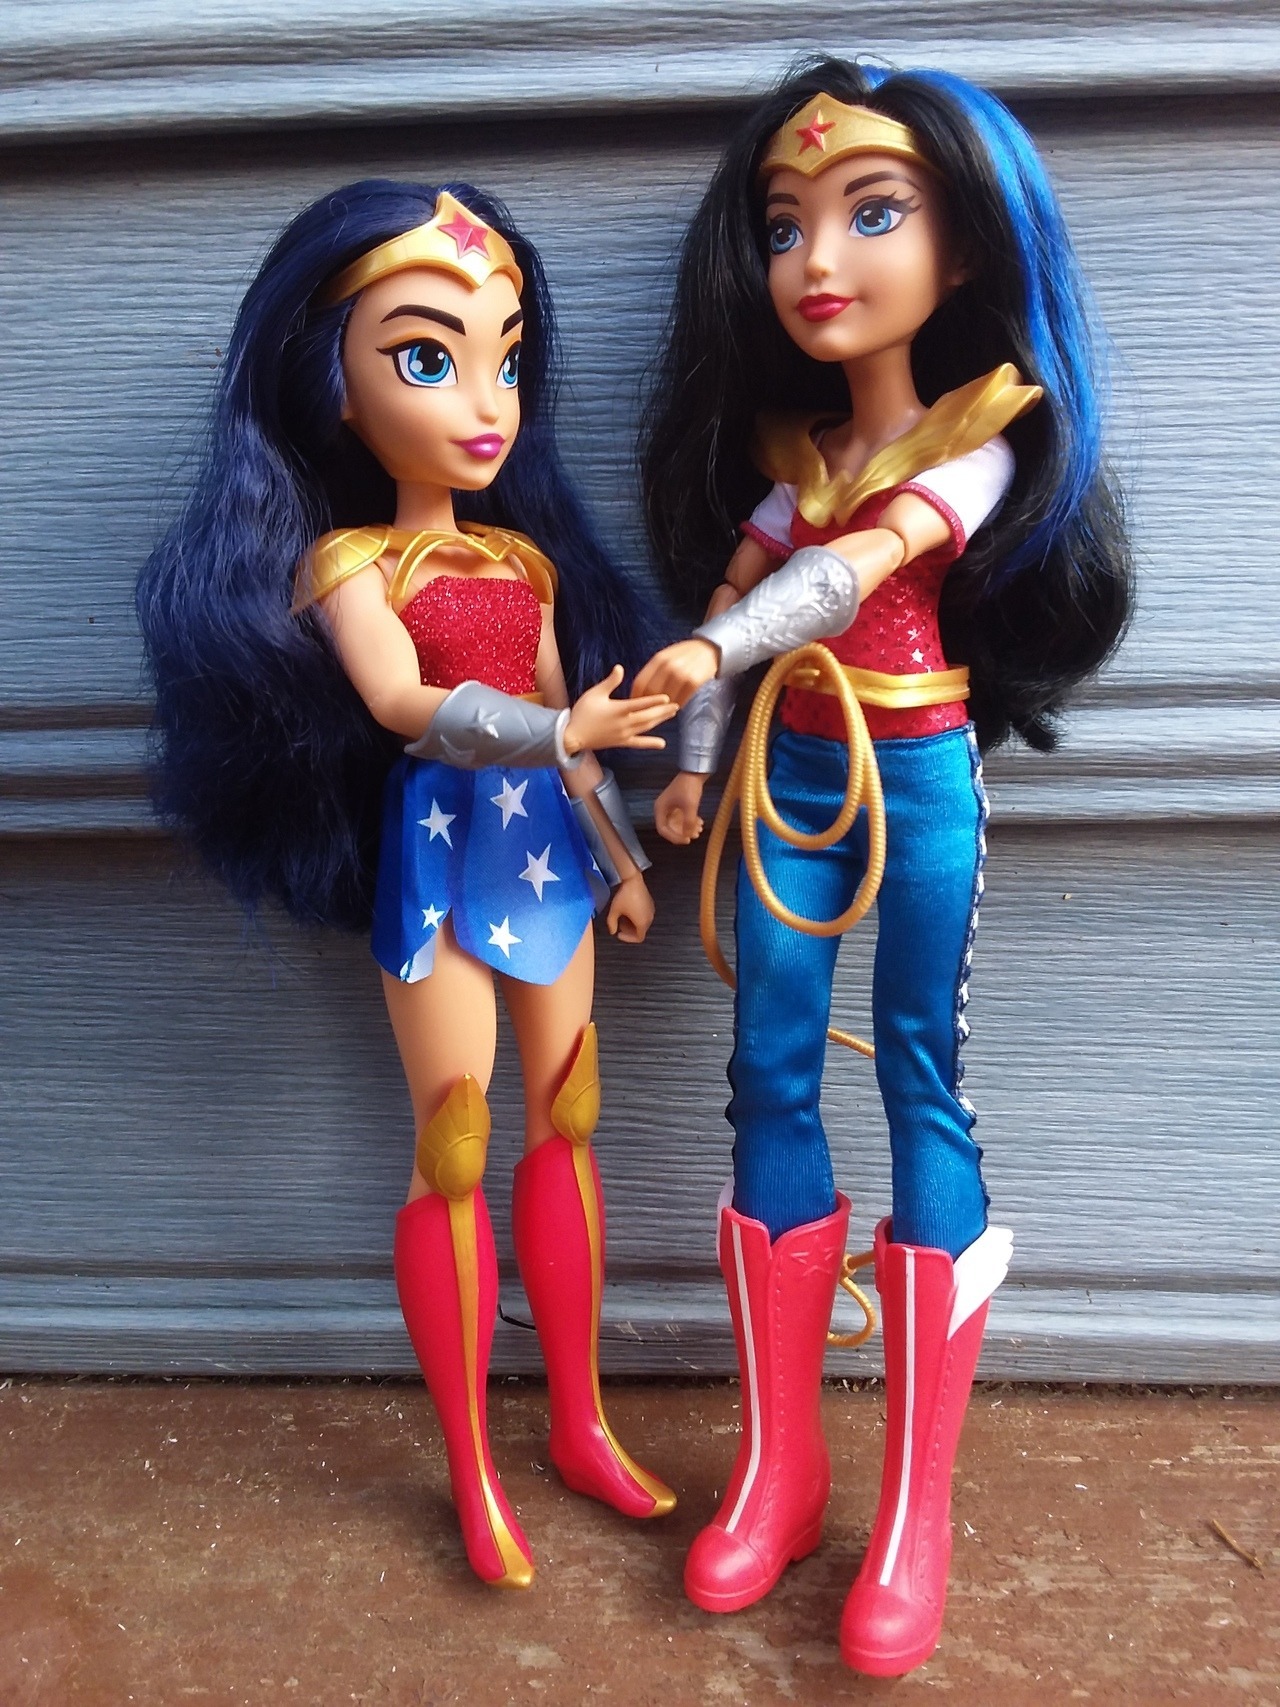 NEW 2019 BARBIE DC COMICS SUPER HERO  WONDER WOMAN TOP  for Barbie doll 